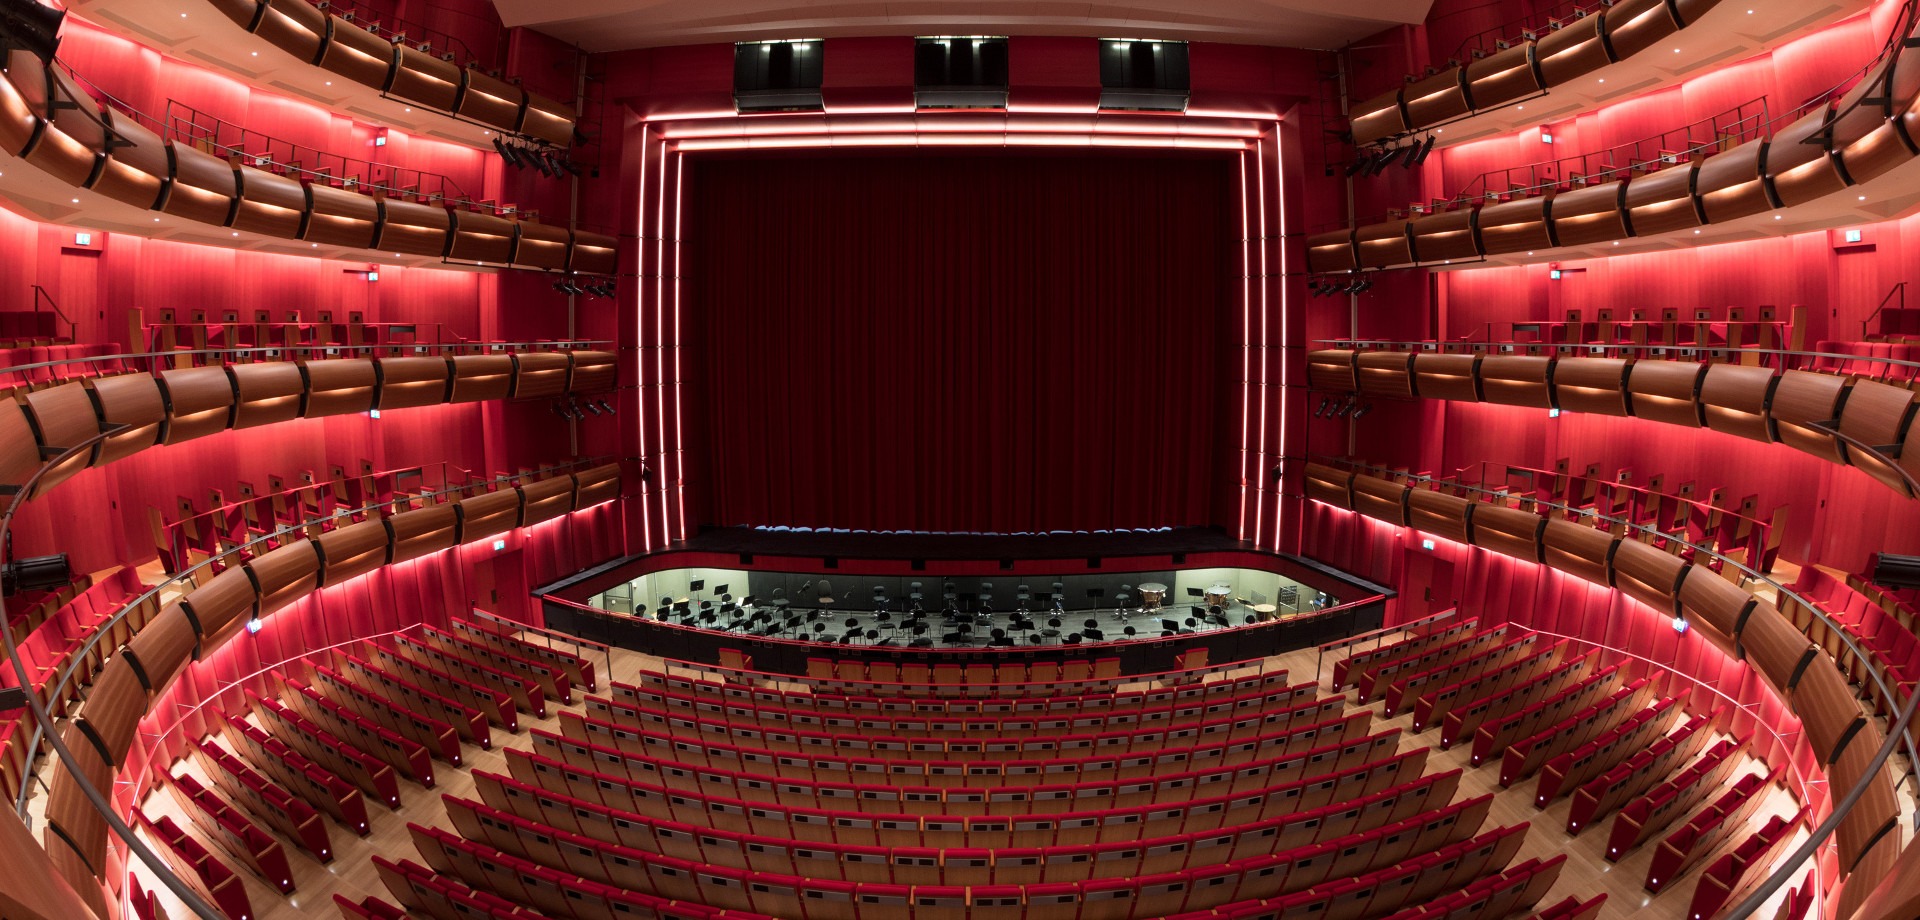 You are currently viewing ΑΝΘΟΥΛΑ ΔΑΝΙΗΛ:   Υπόθεση Μακρόπουλου ή το ελιξίριον της νιότης.  Μια όπερα του Τσέχου  LEOS JANACEK  στην Εθνική Λυρική Σκηνή